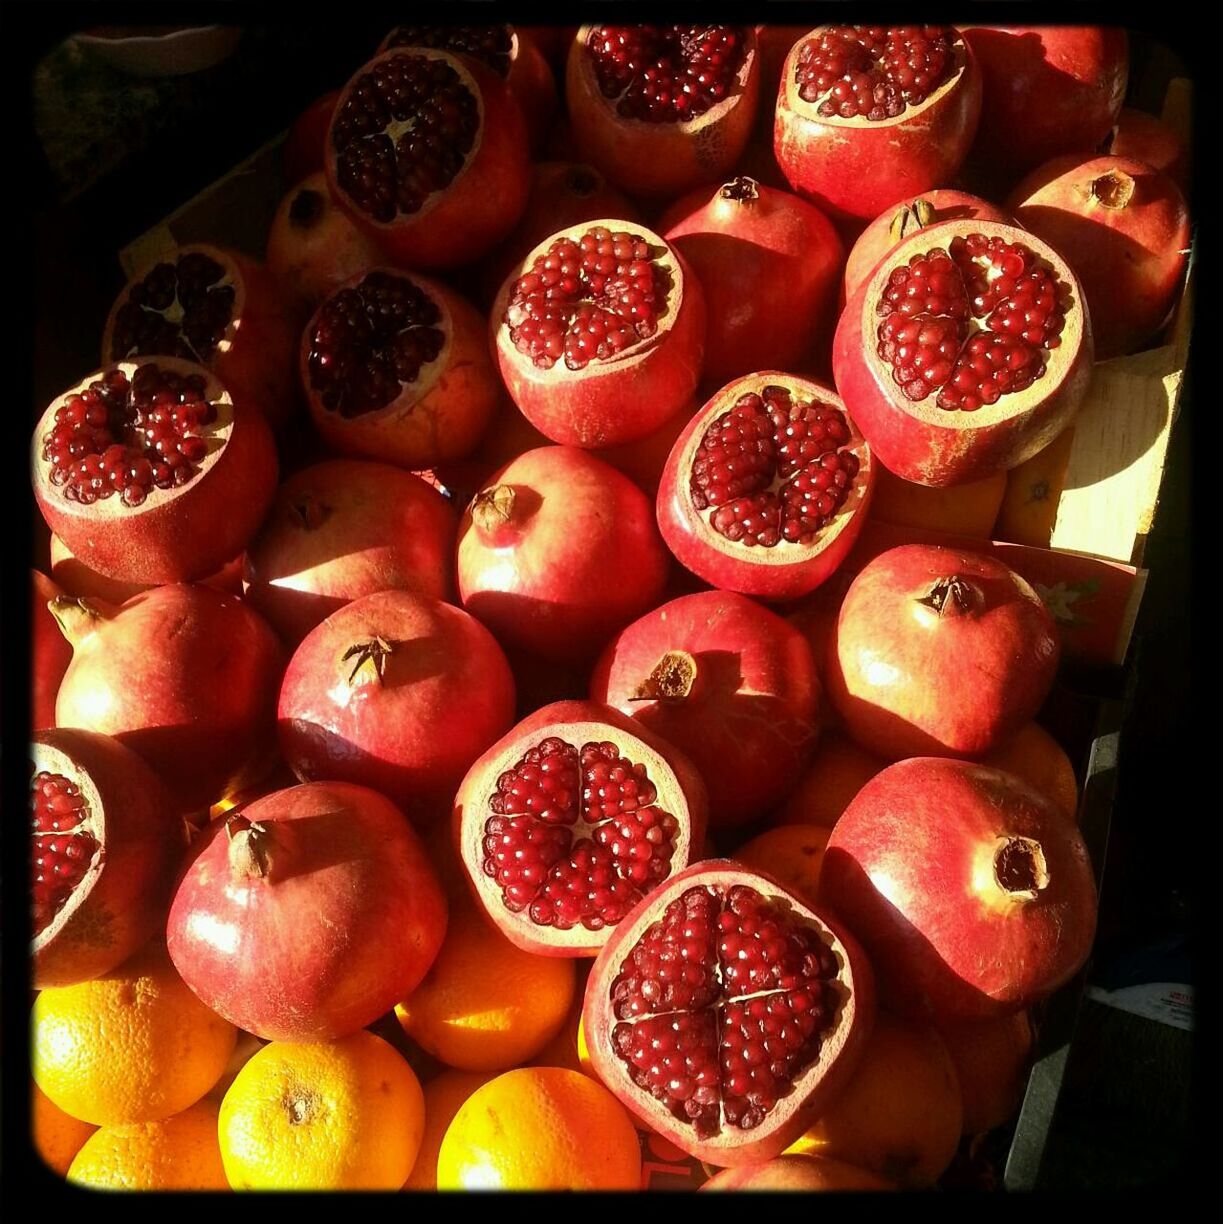 Pomegranates and lemons